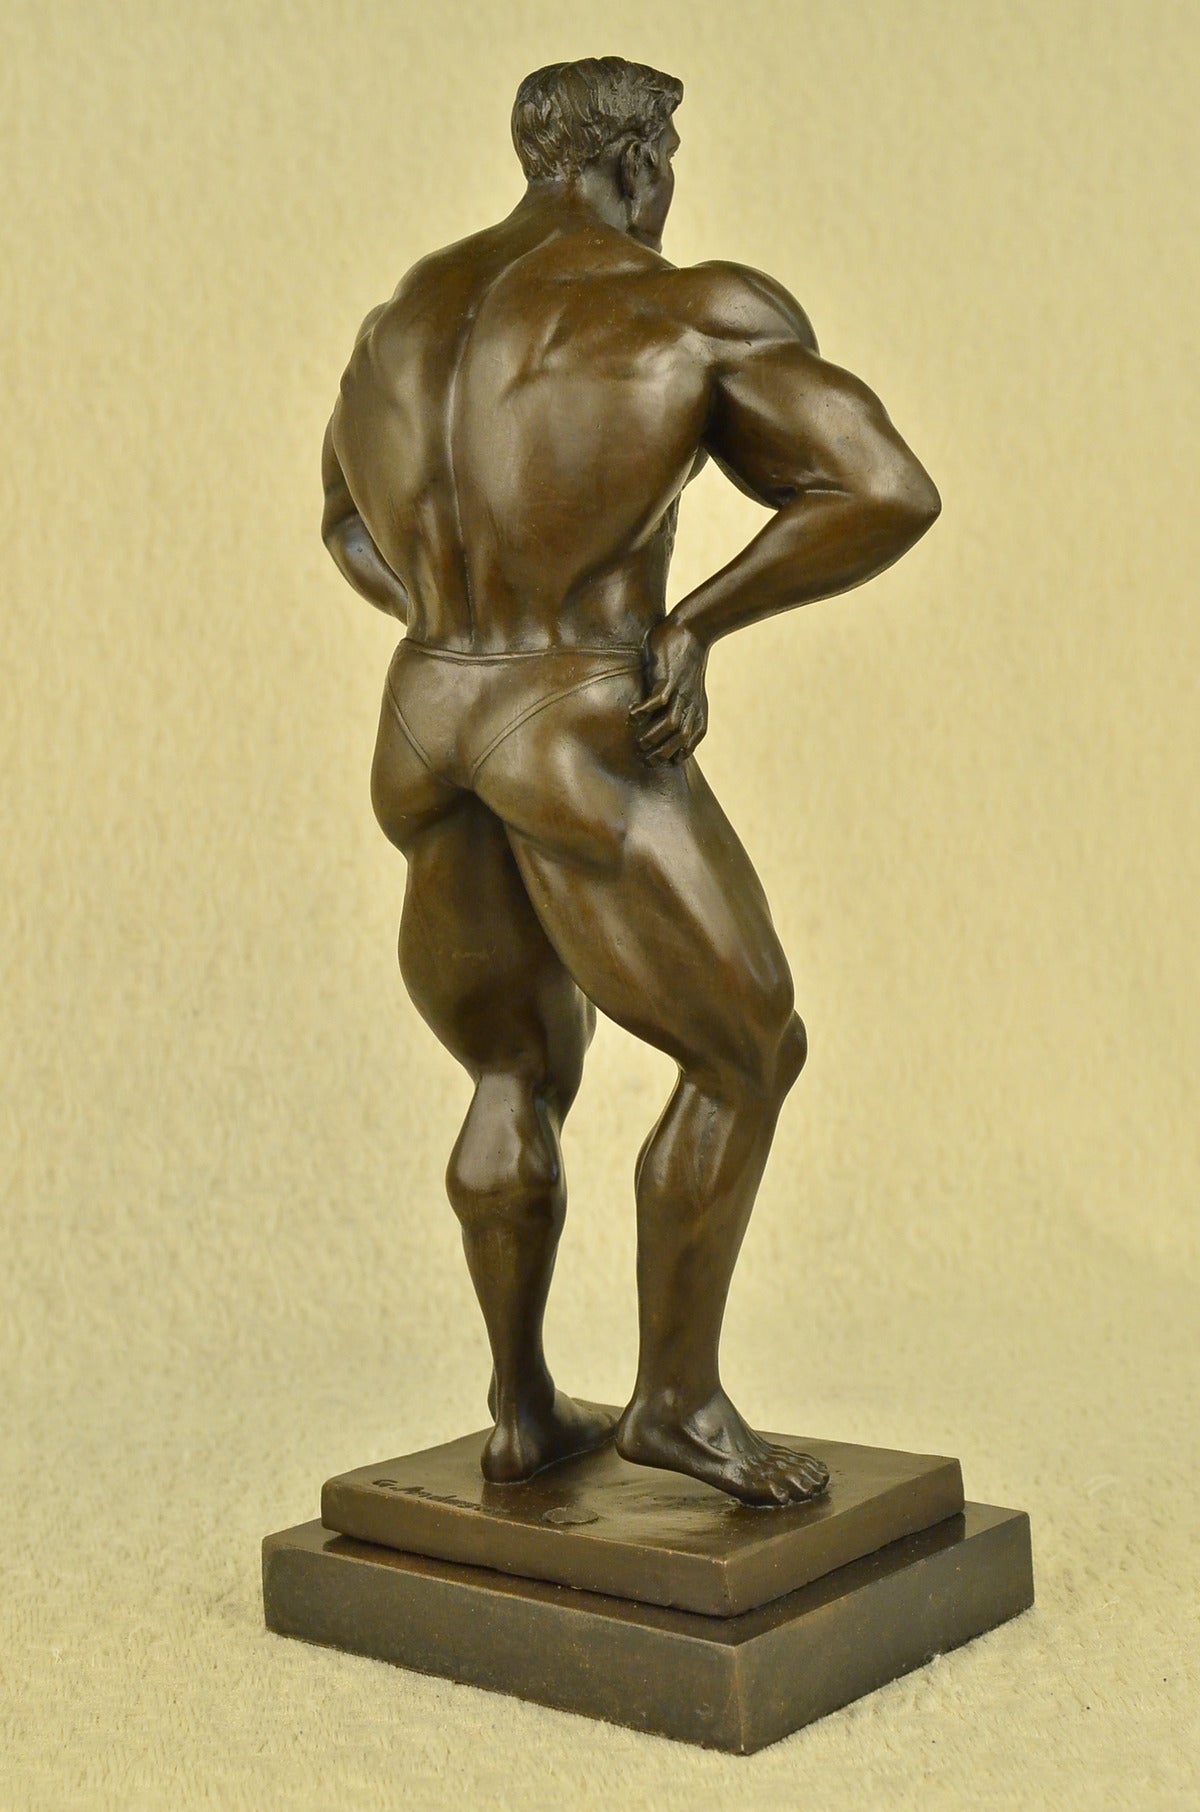 Handcrafted bronze sculpture SALE Standing Male Nude Muscular Original